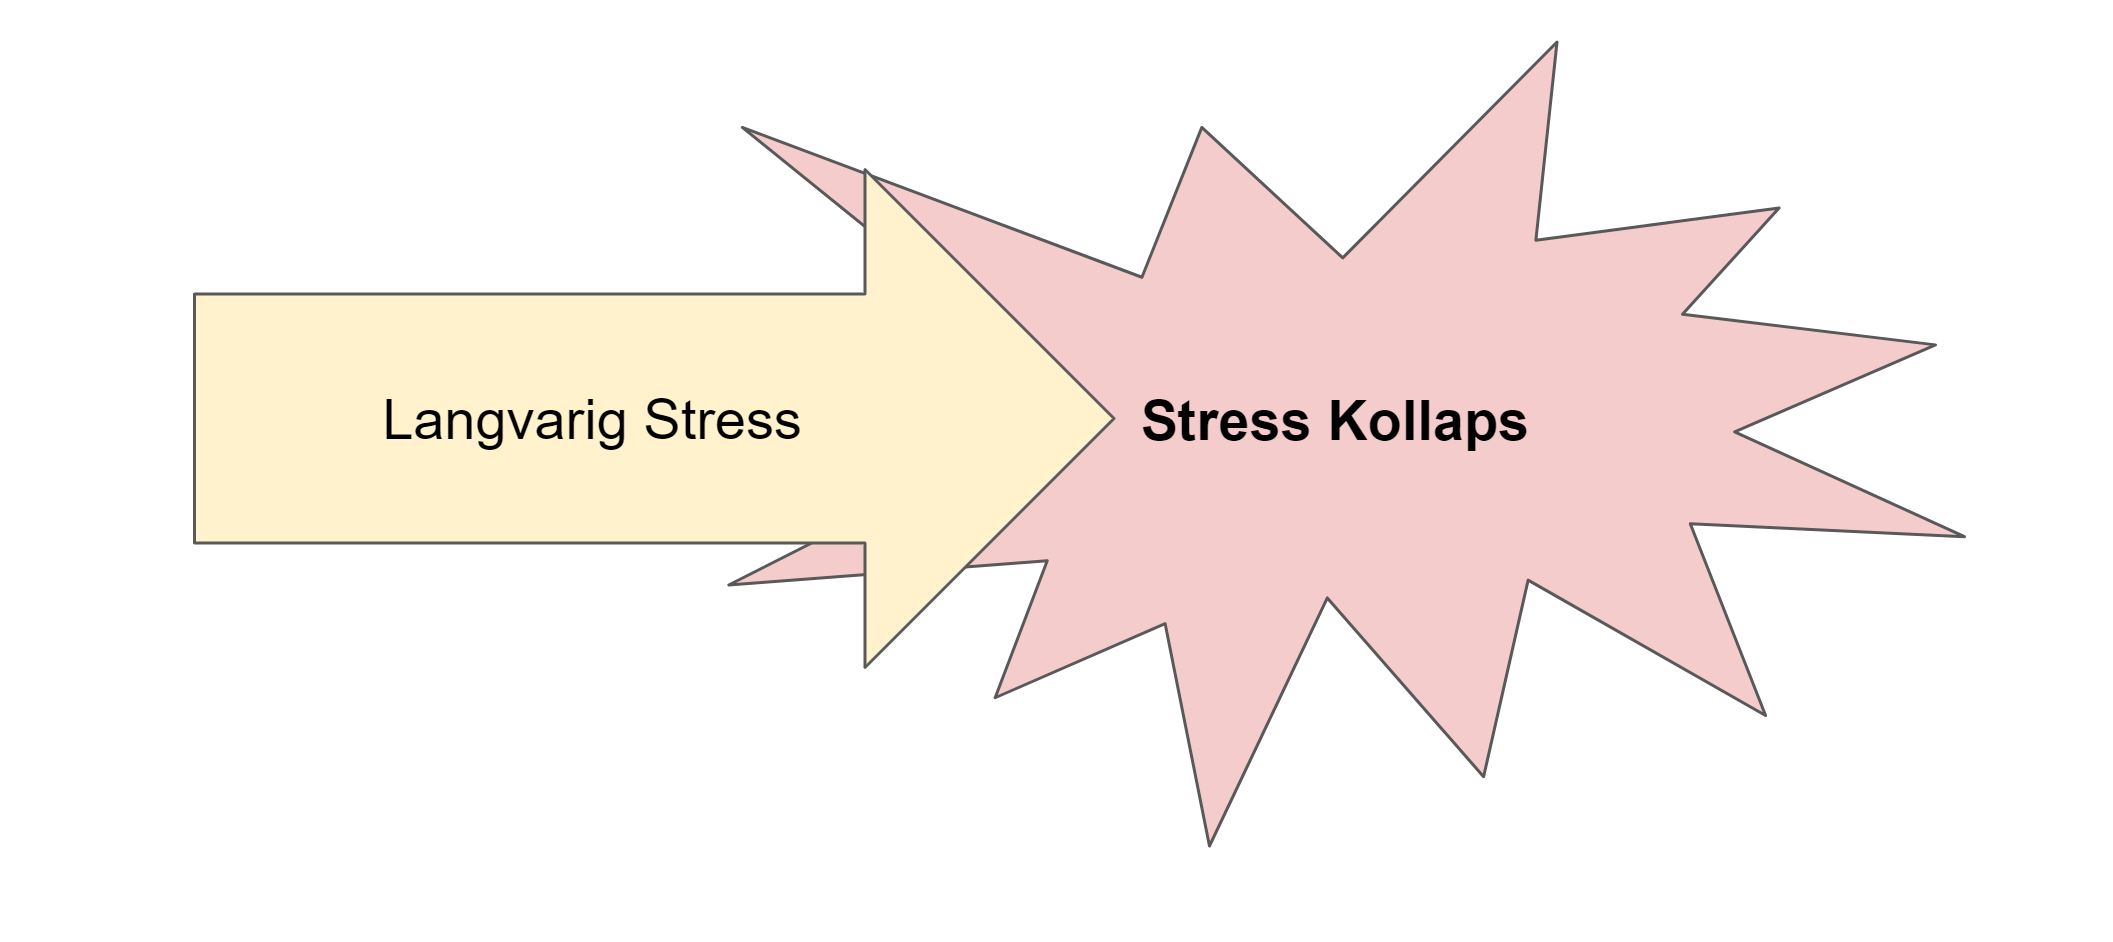 stress kollaps - langvarig stress føre til stress kollaps